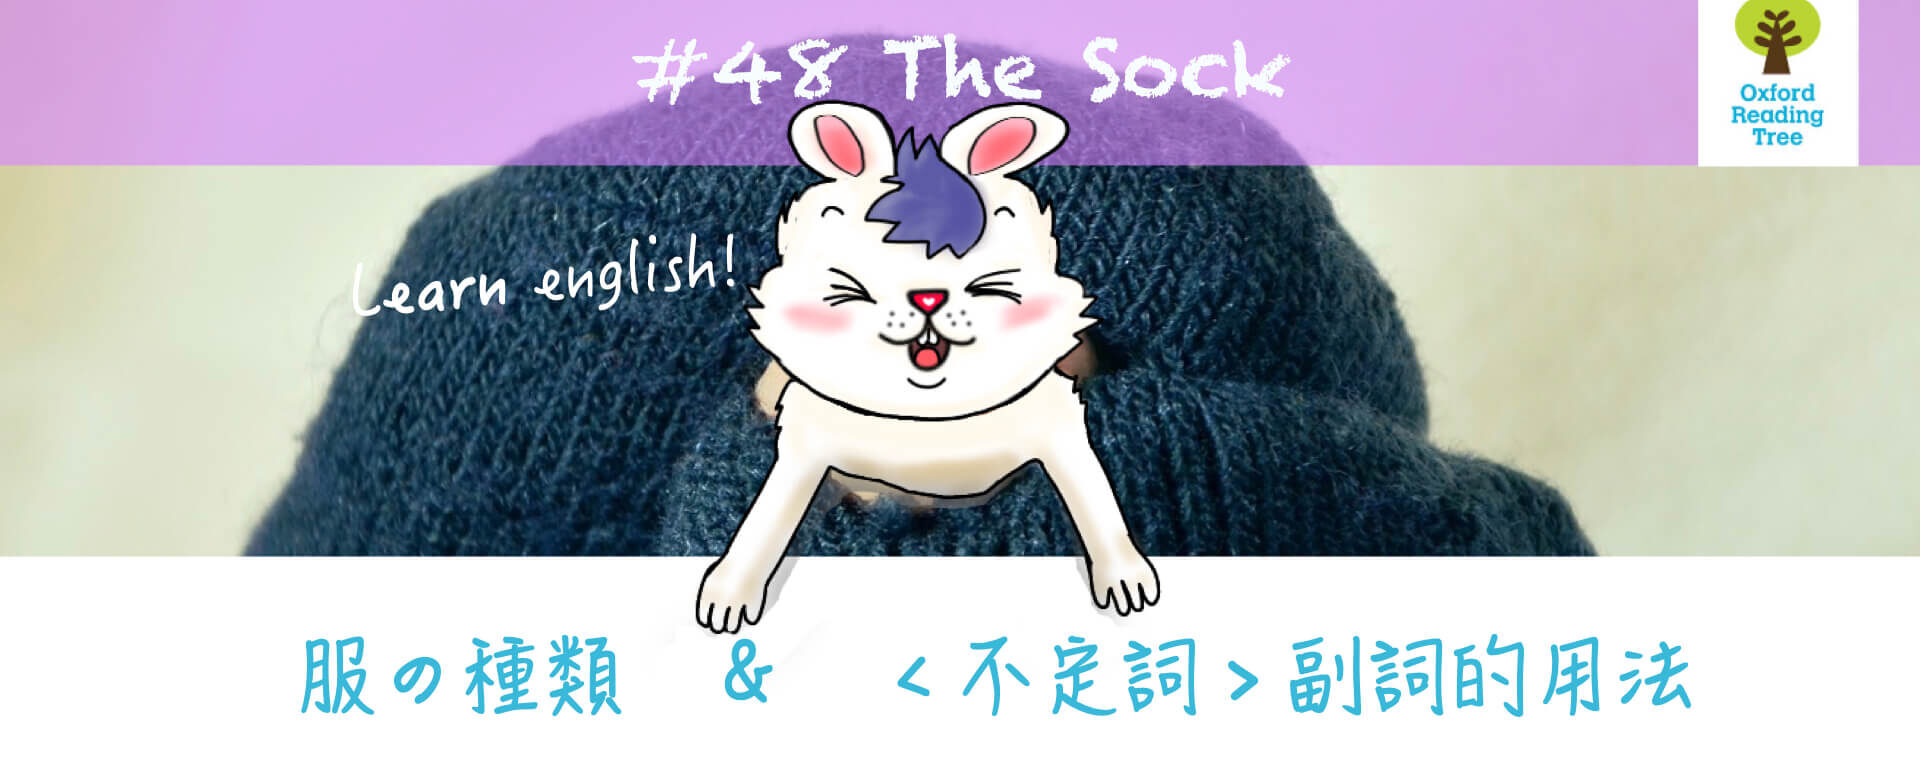 #48 The Sock